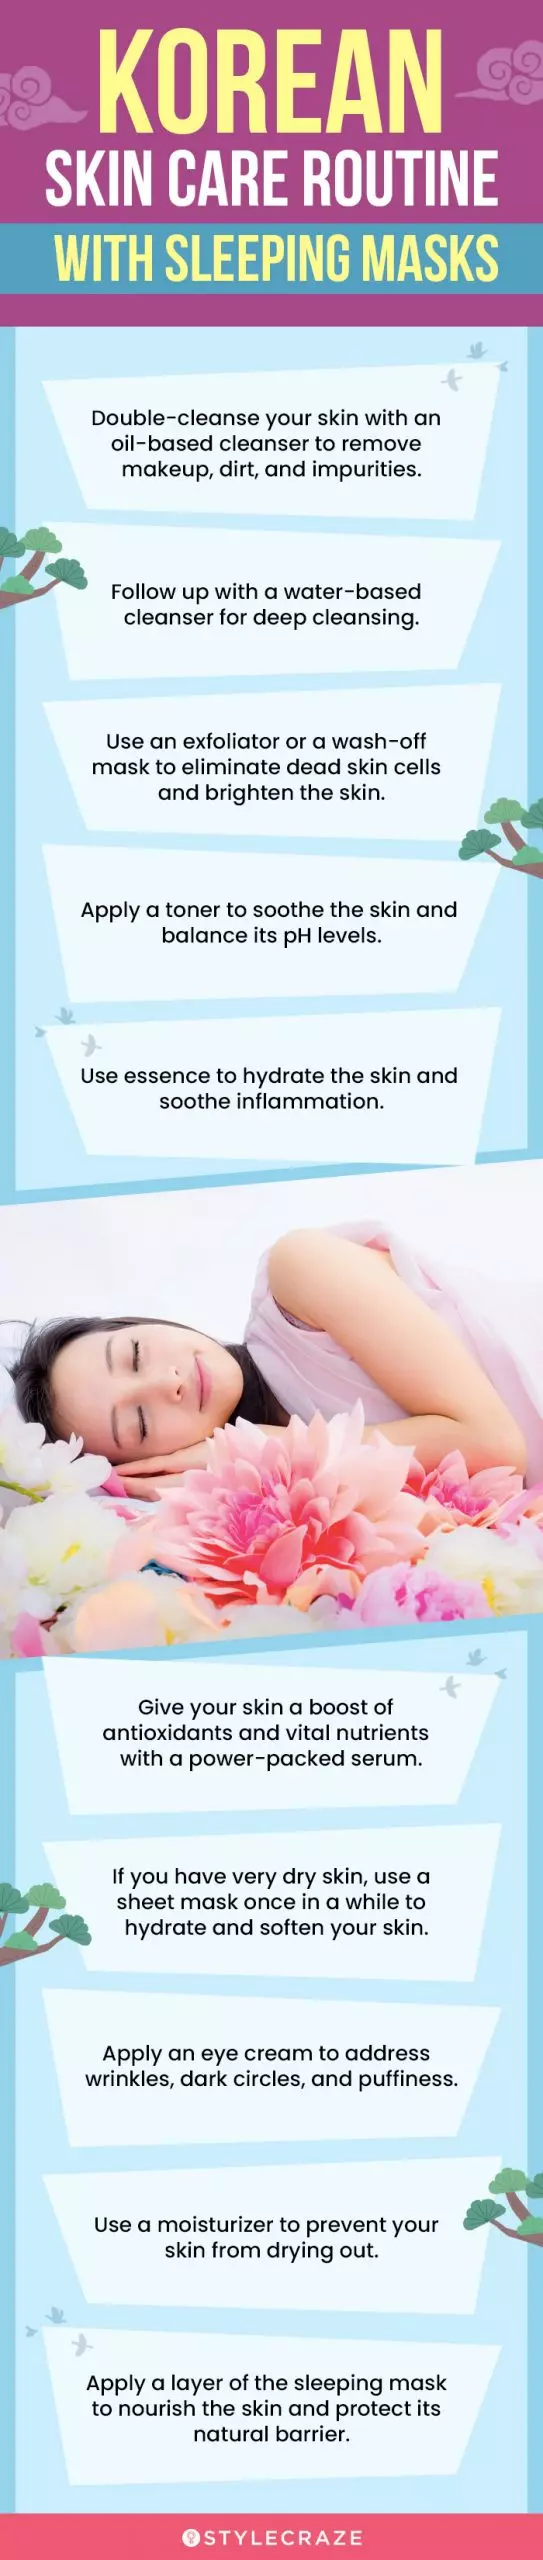 Korean Skincare Routine With Sleeping Masks (infographic)